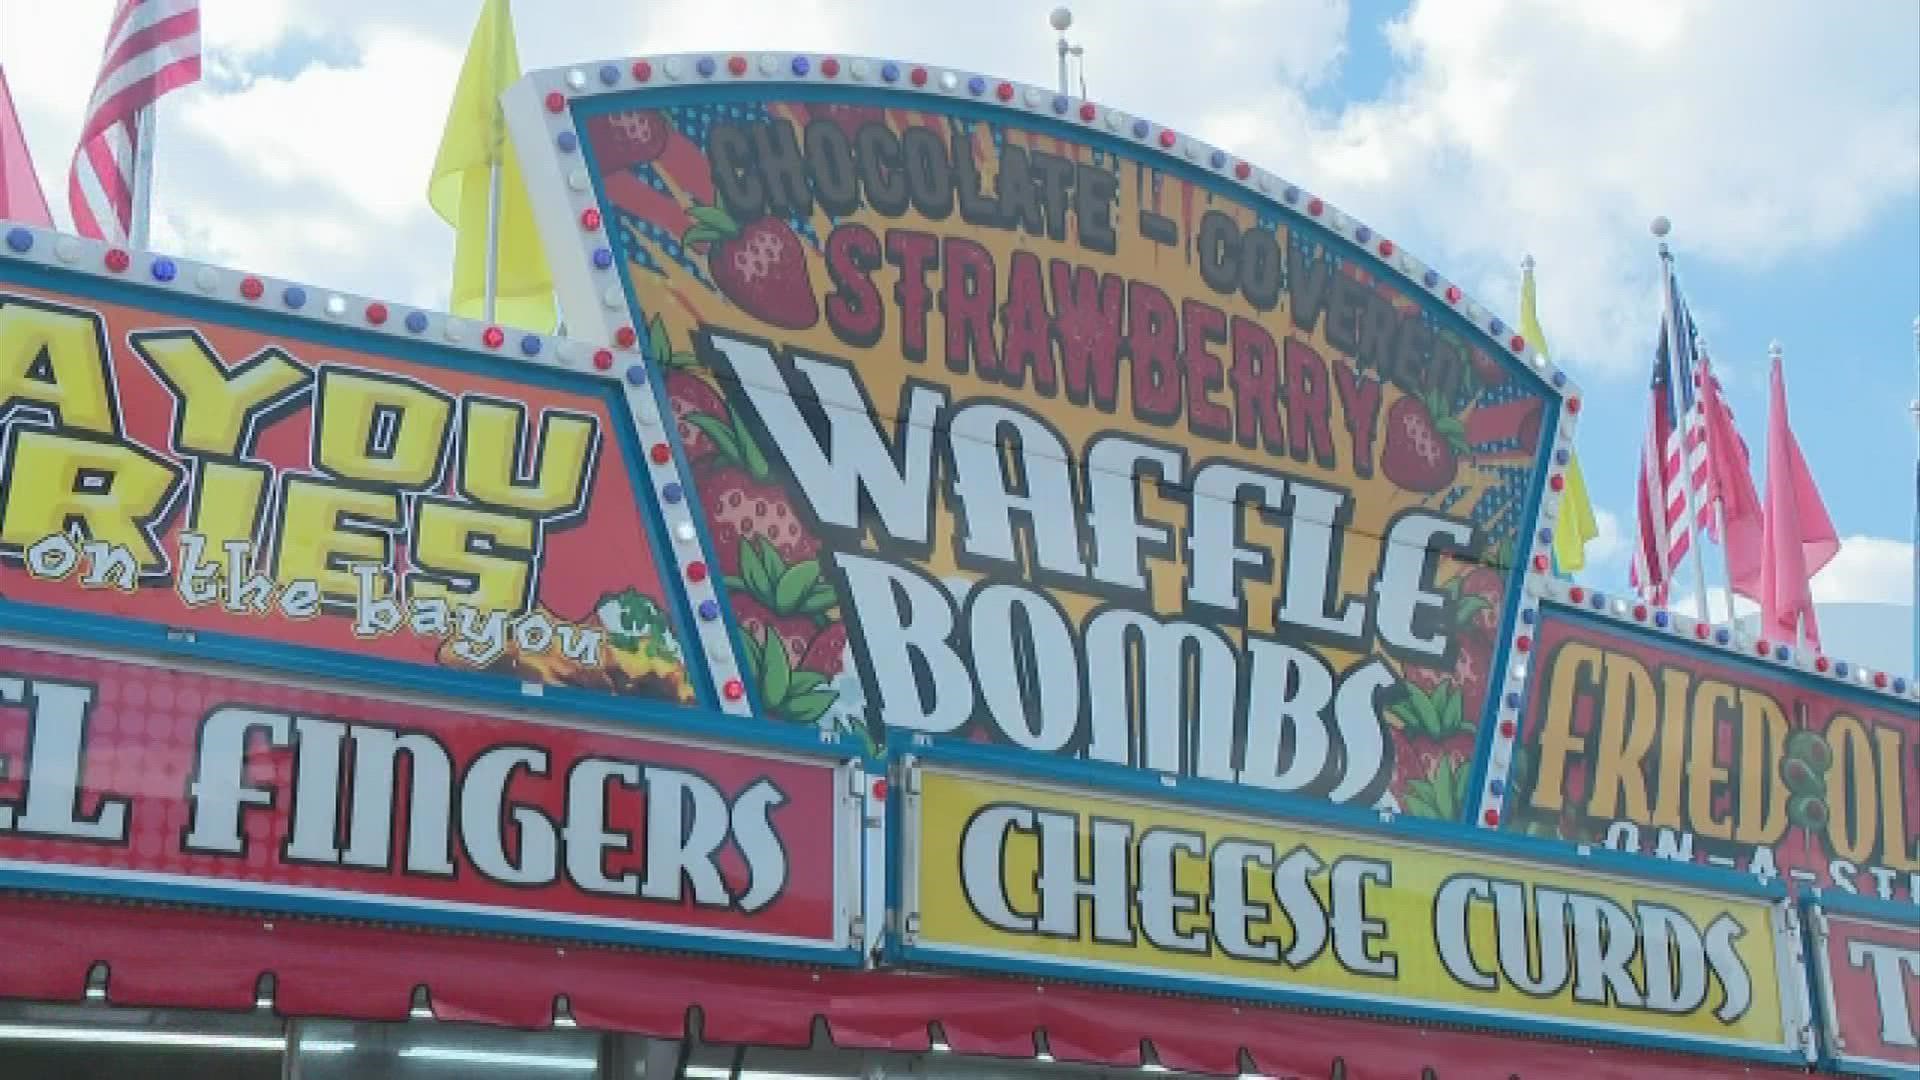 New fair foods featured at Ohio State Fair